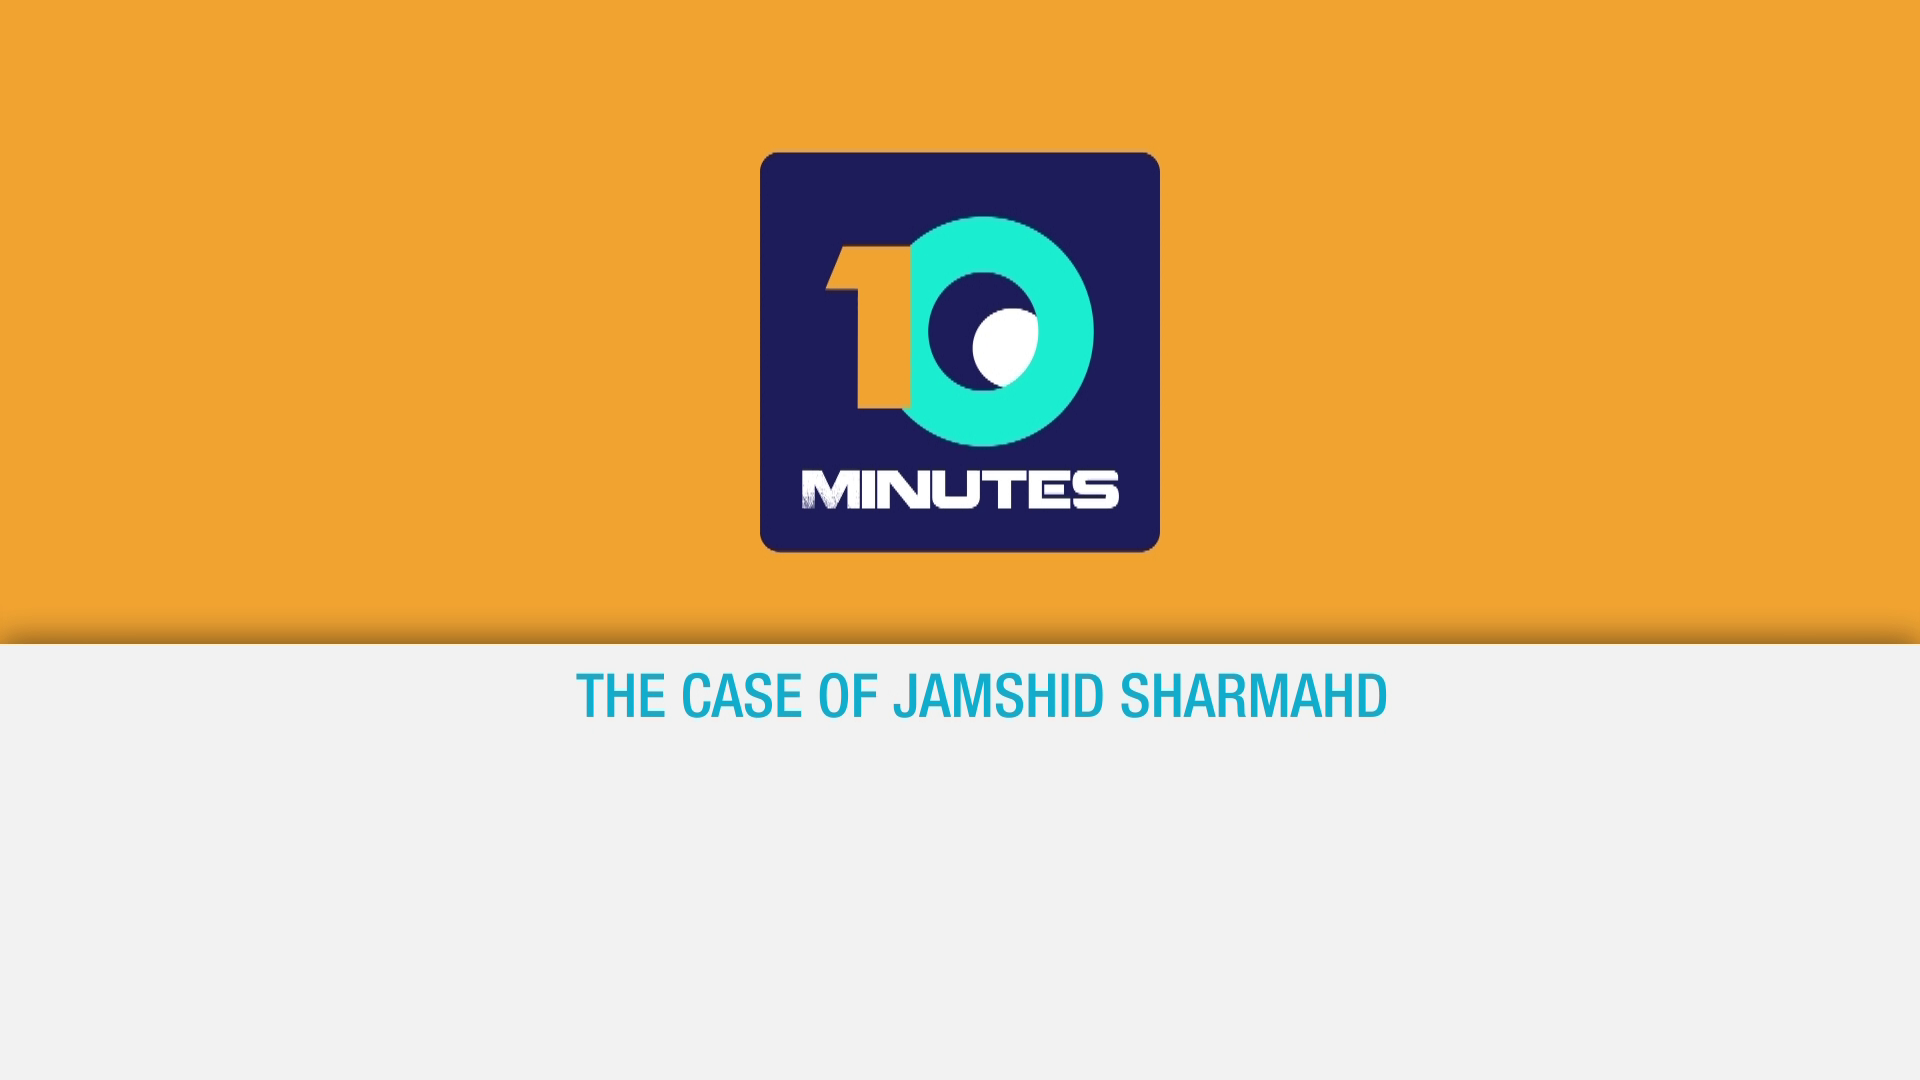 The Case of Jamshid Sharmahd